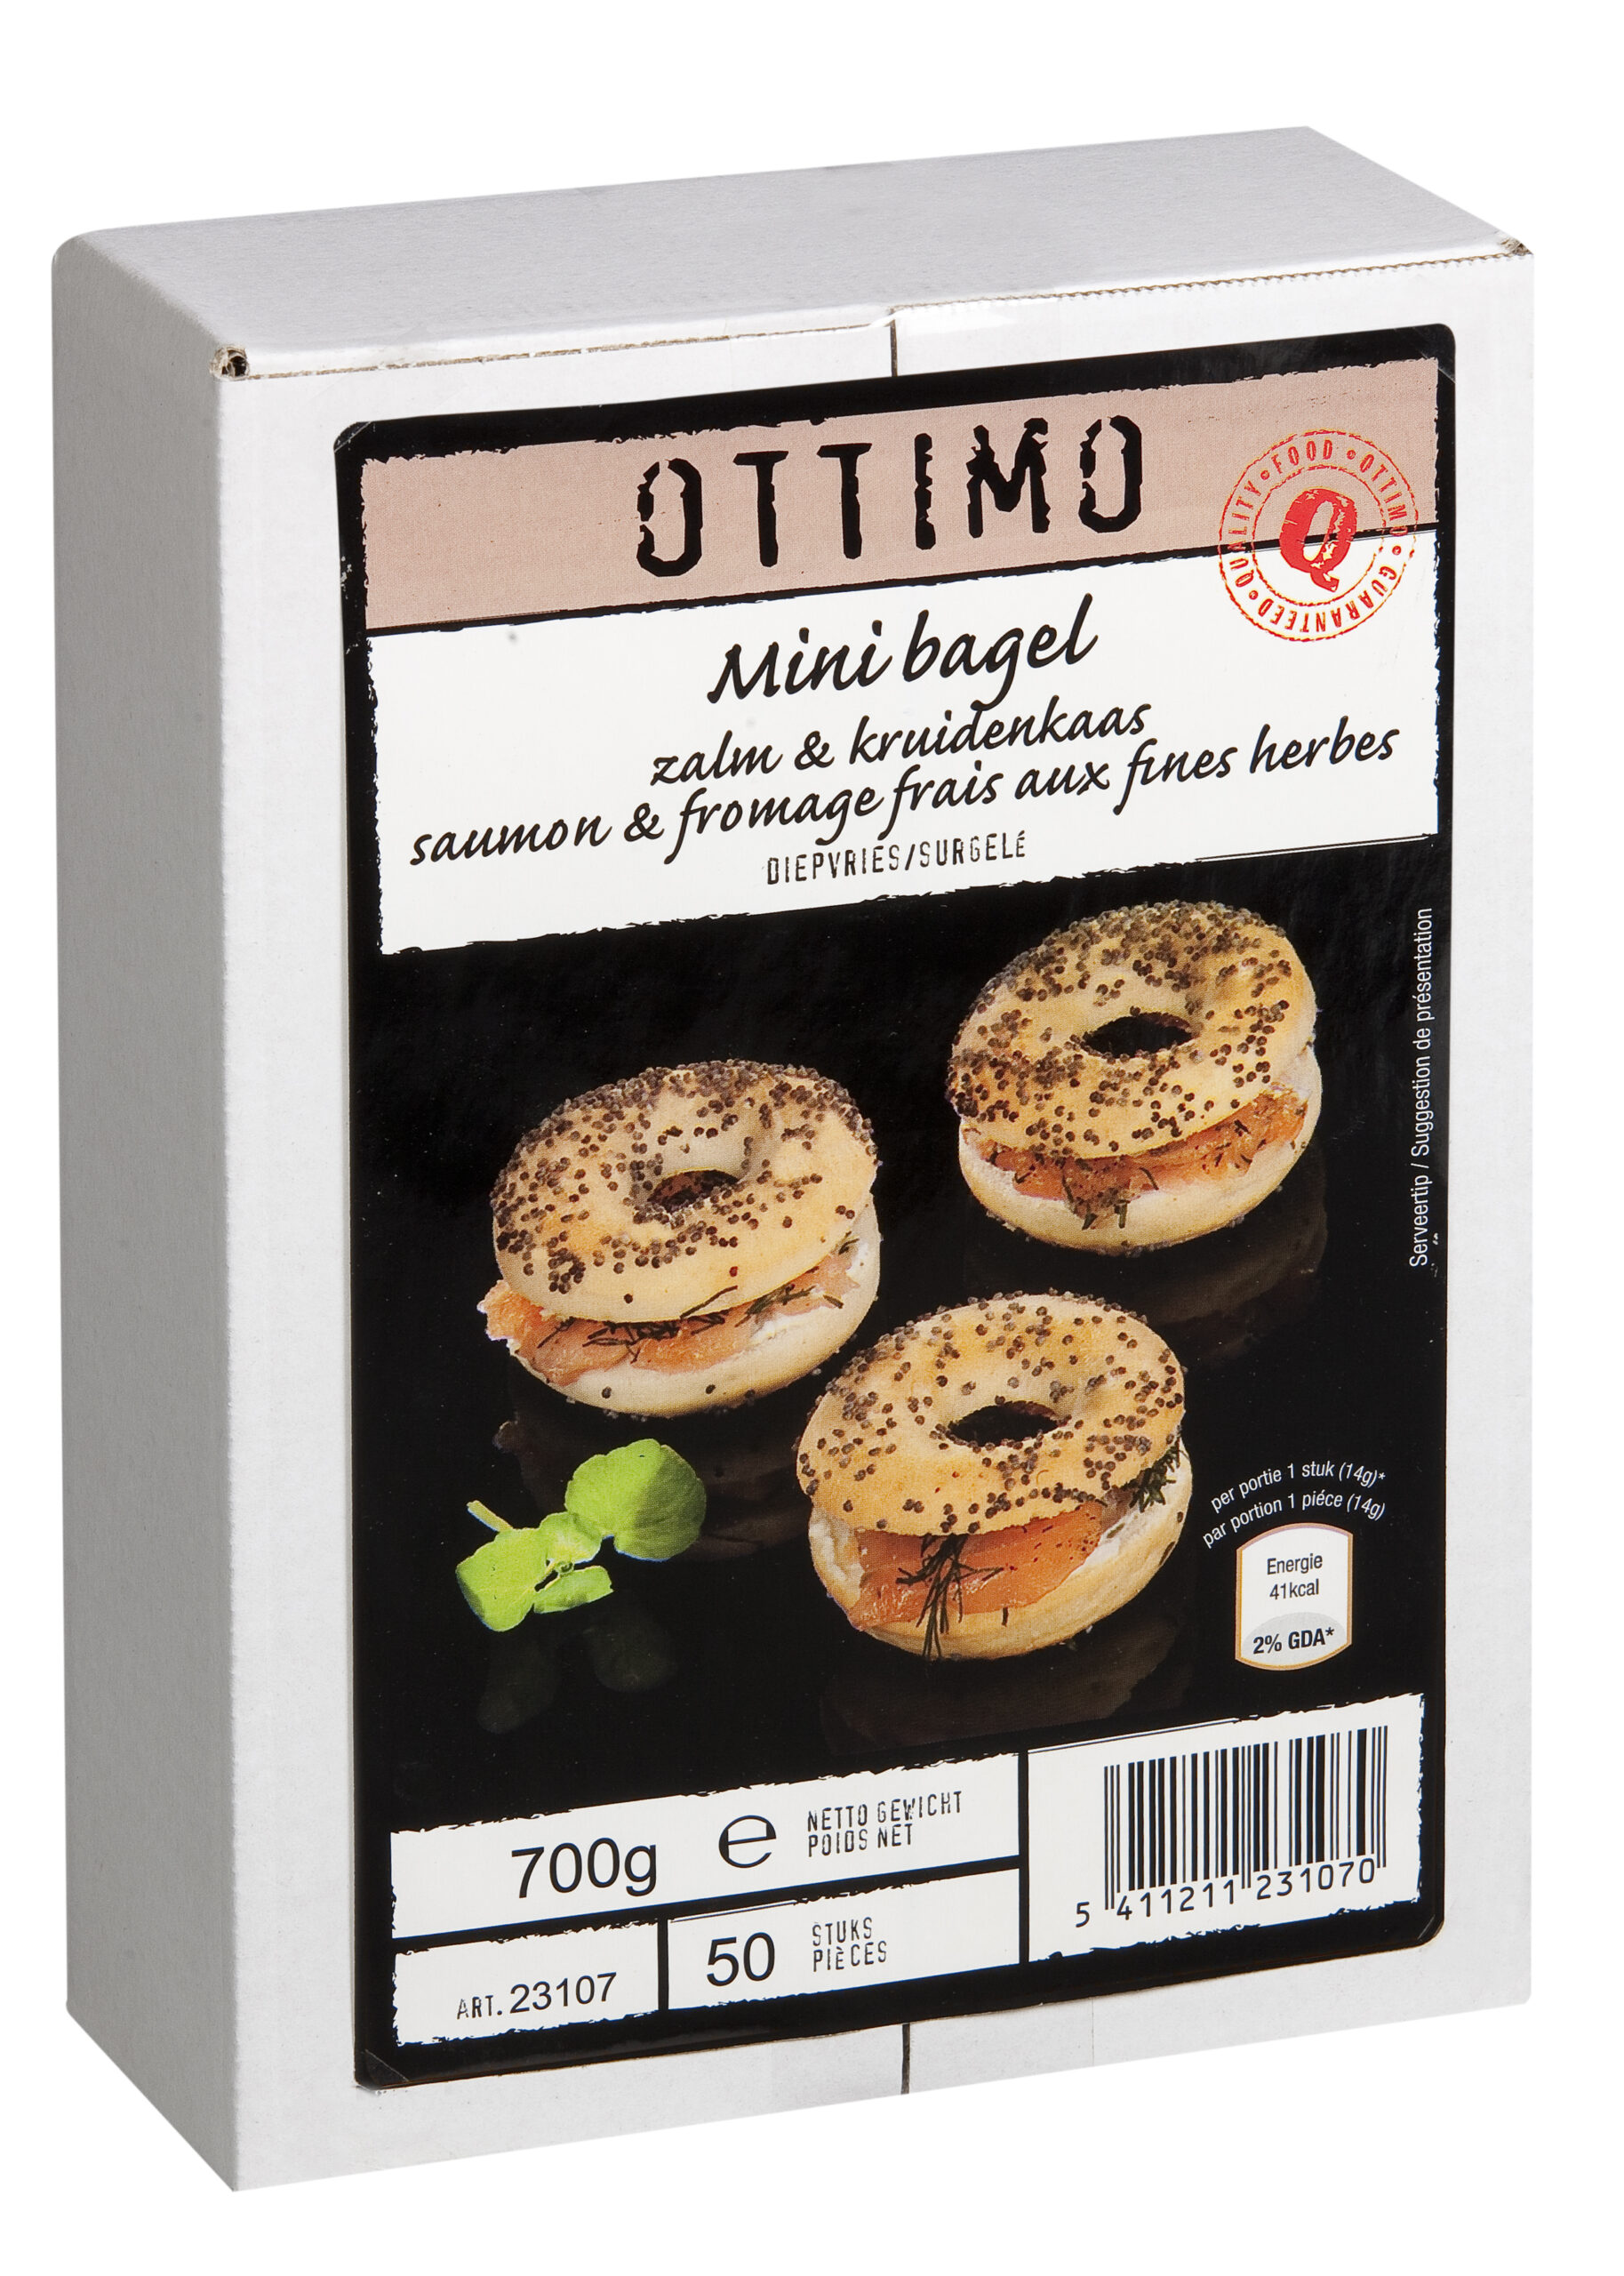 Mini bagel zalm & kruidenkaas 50 x 14 g OTTIMO